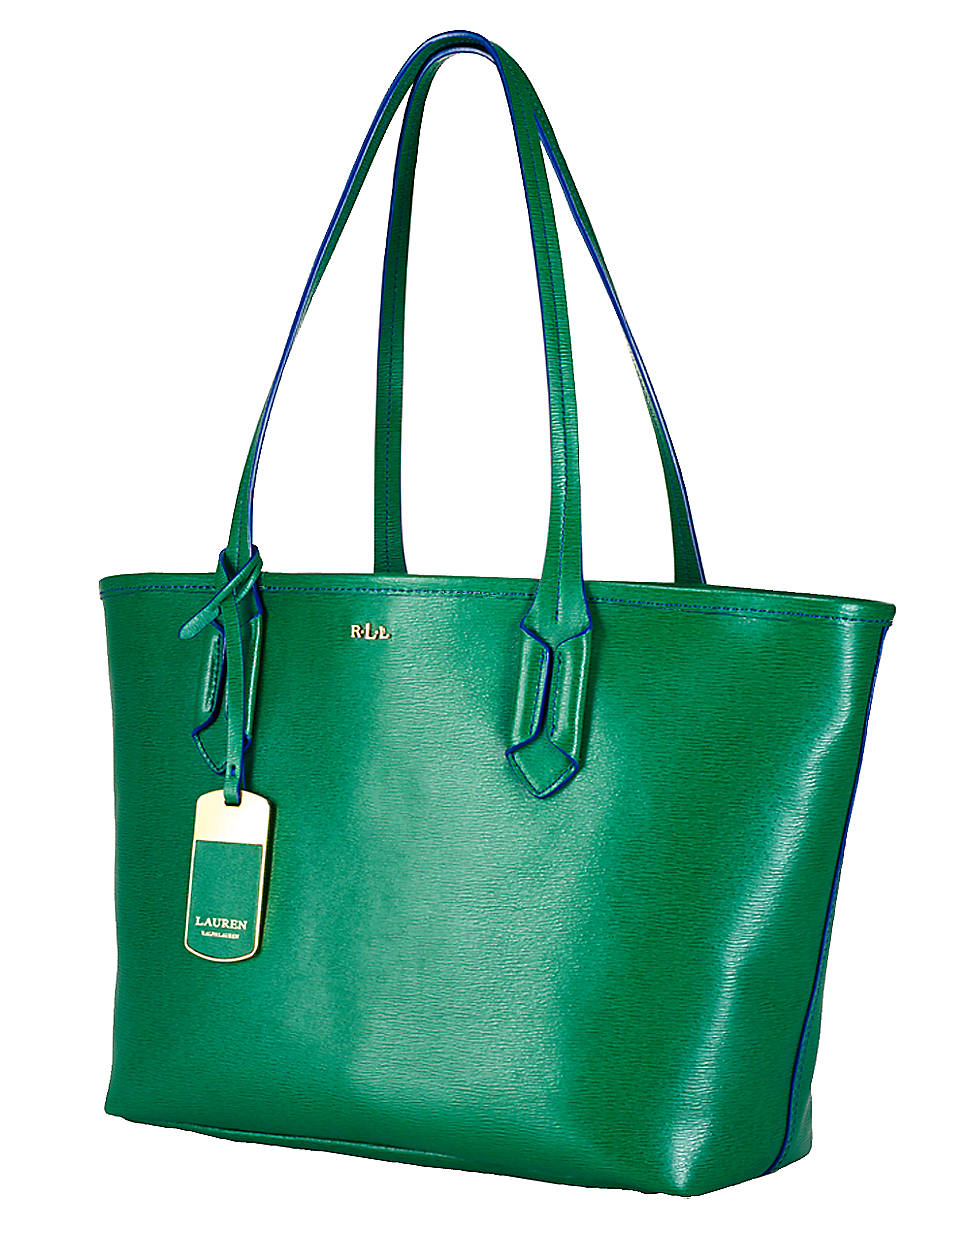 Lauren By Ralph Lauren Tate Leather Shopper Bag in Green (EMERALD) | Lyst